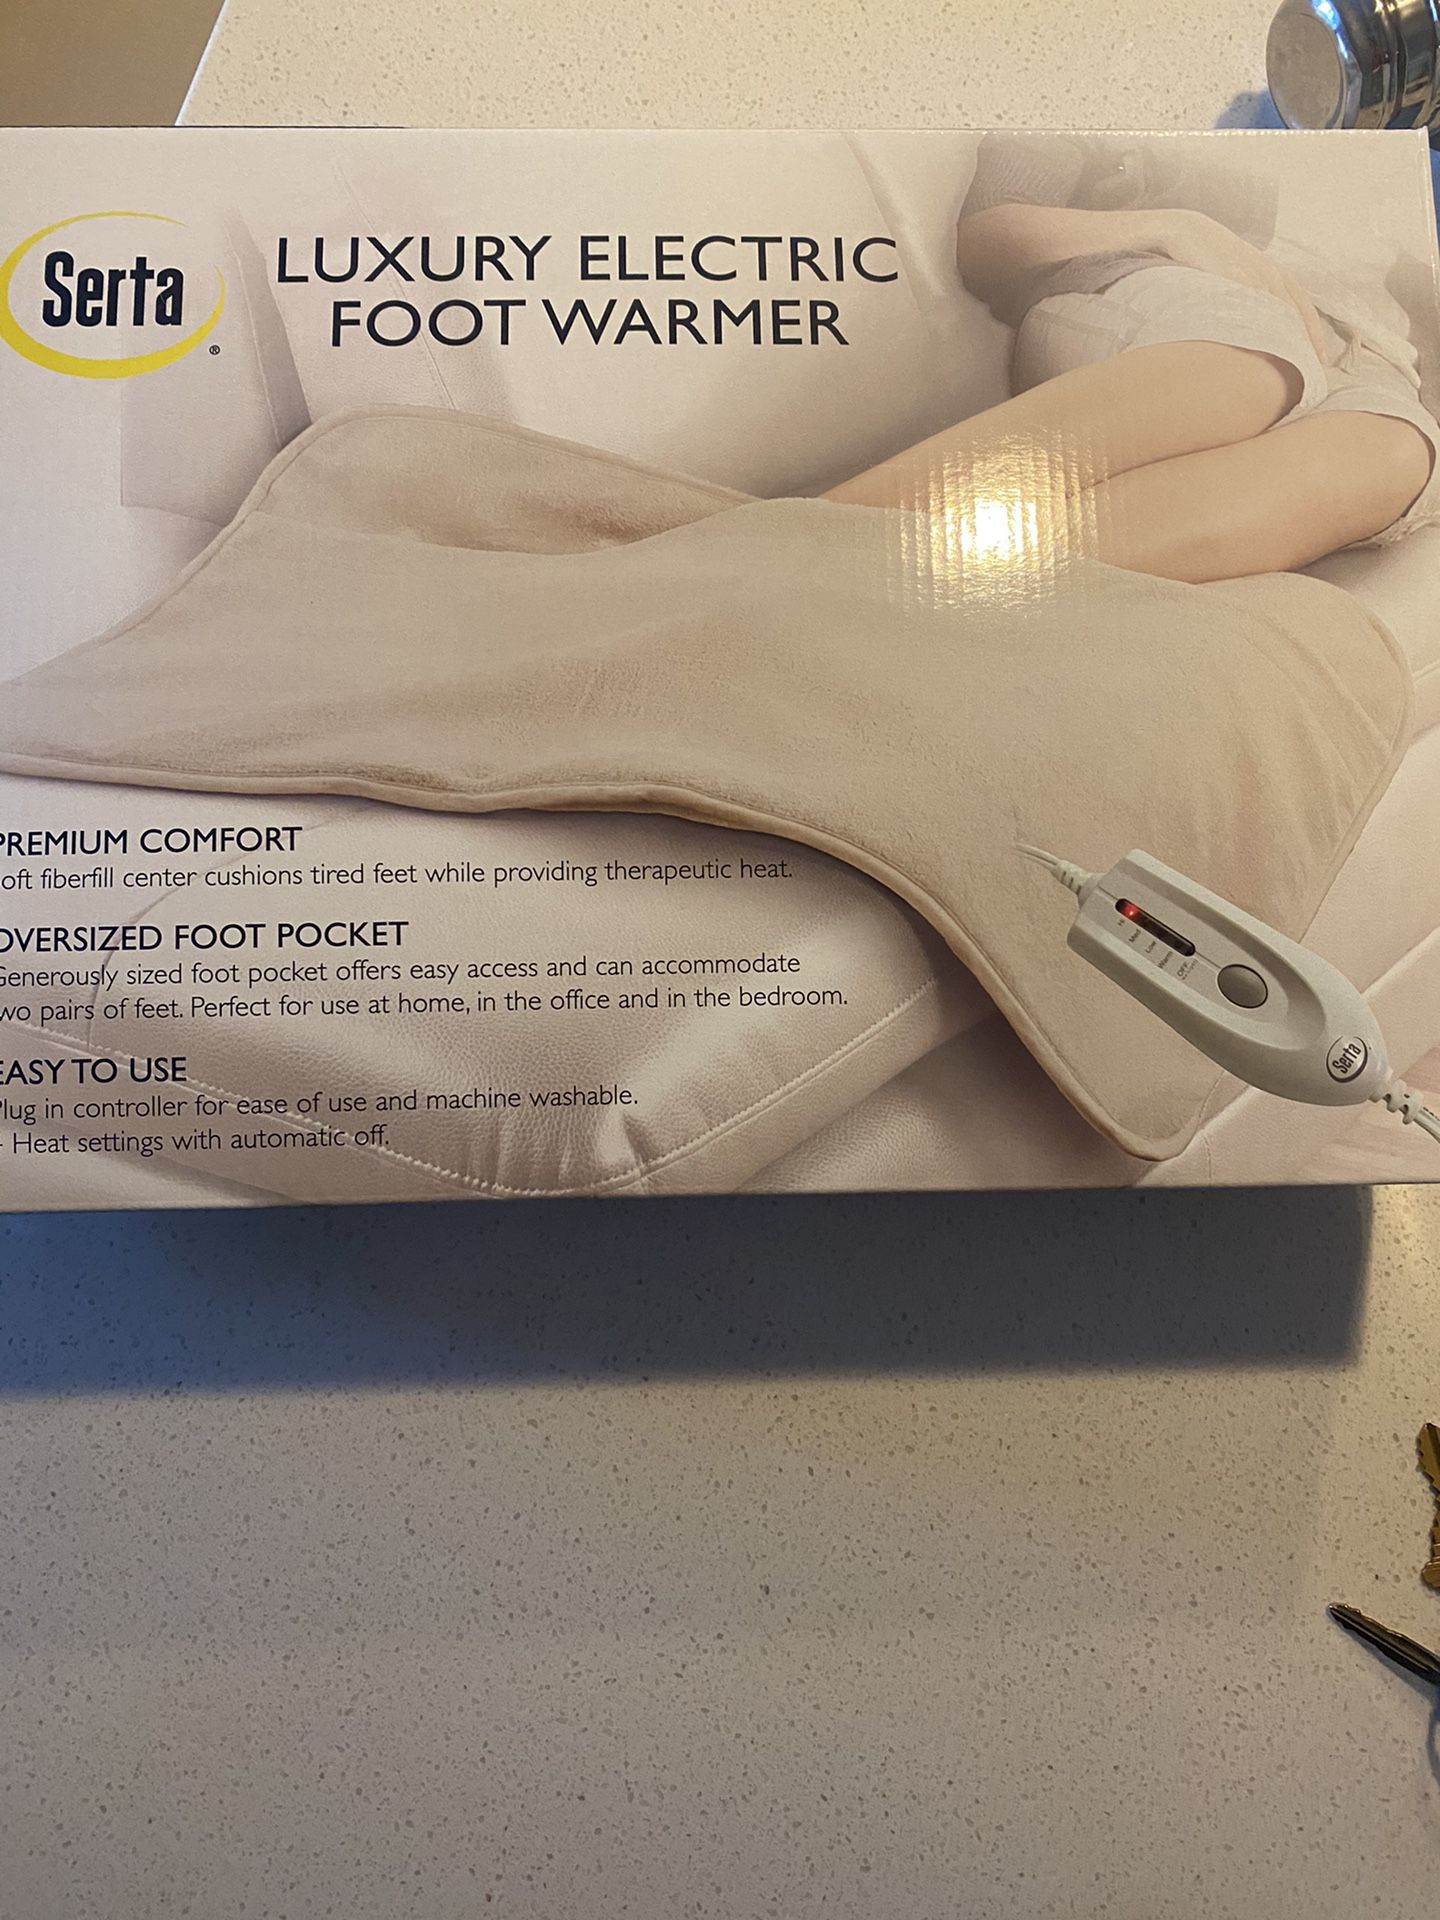 Serta electric foot warmer